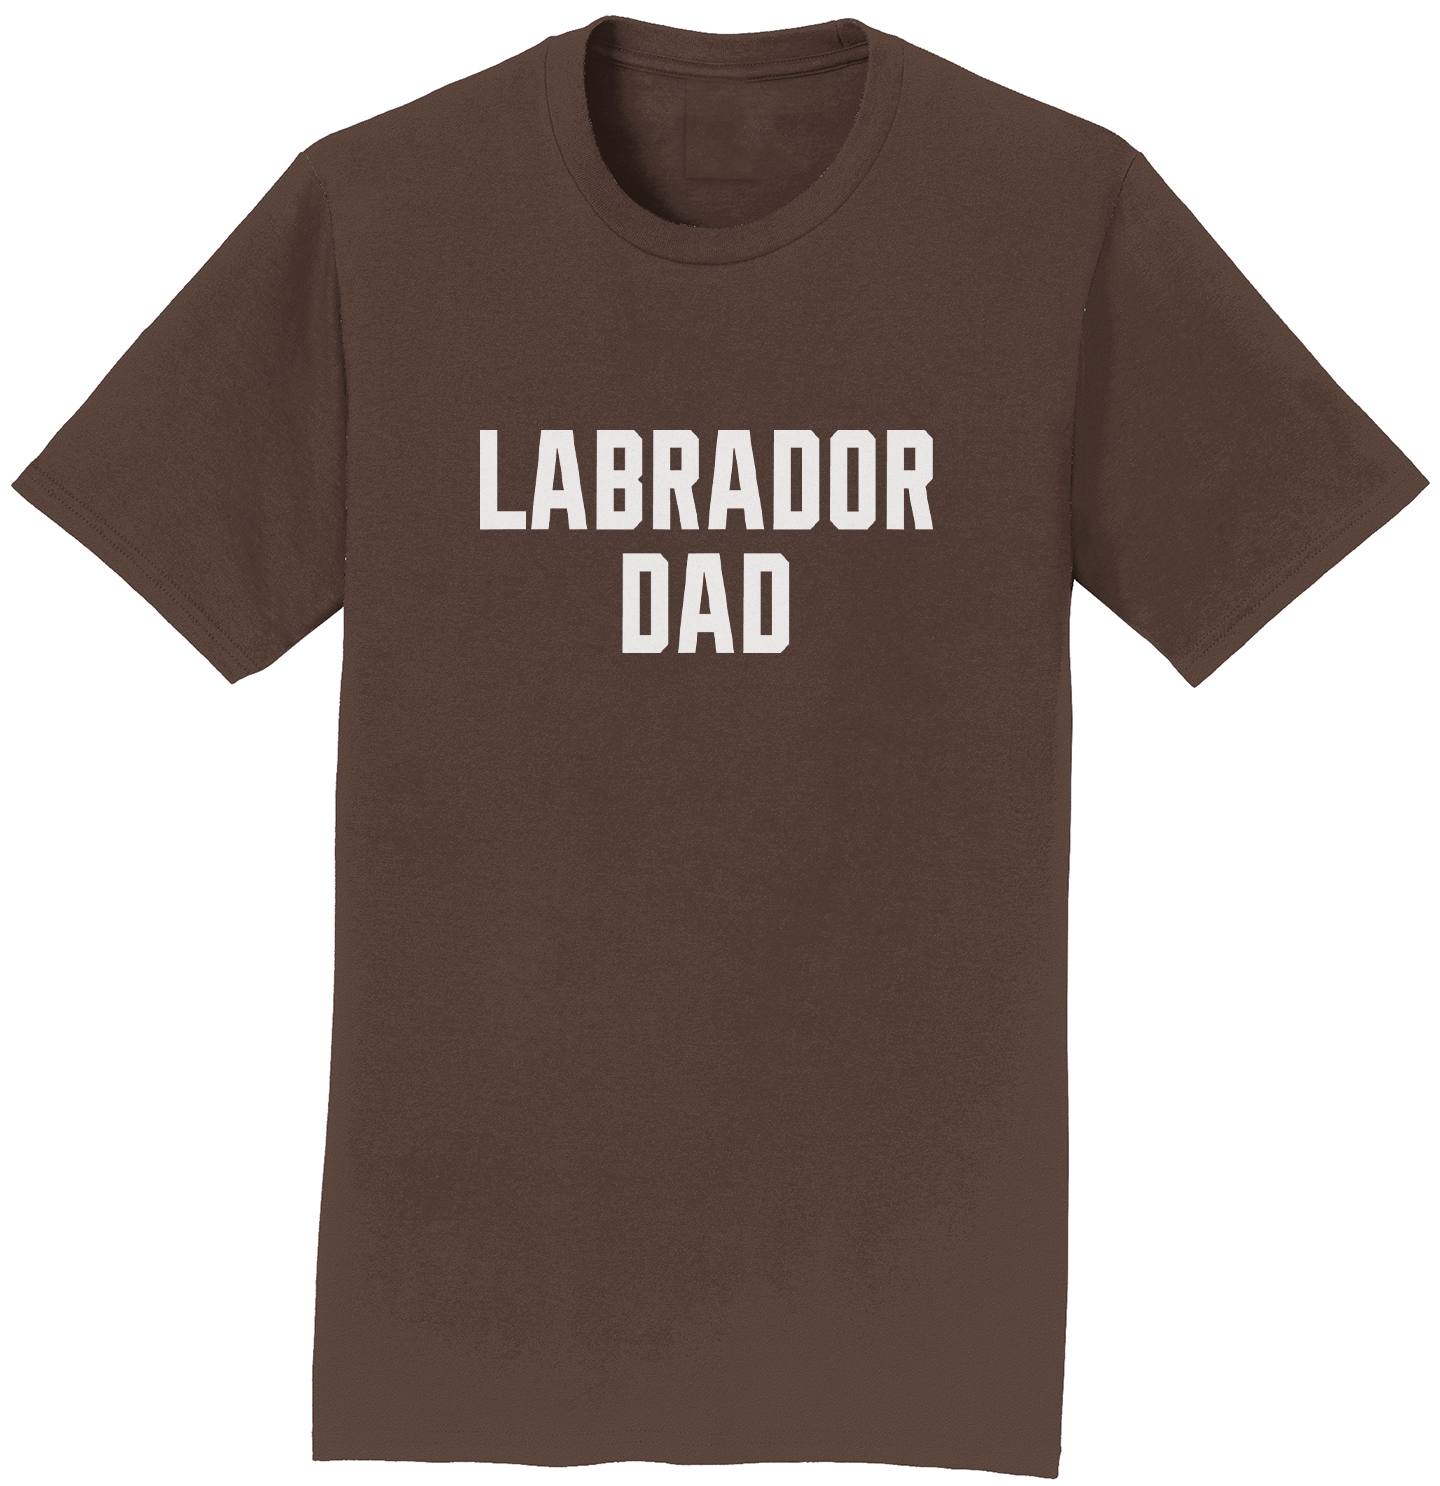 Labrador Dad - Block Font - Adult Unisex T-Shirt